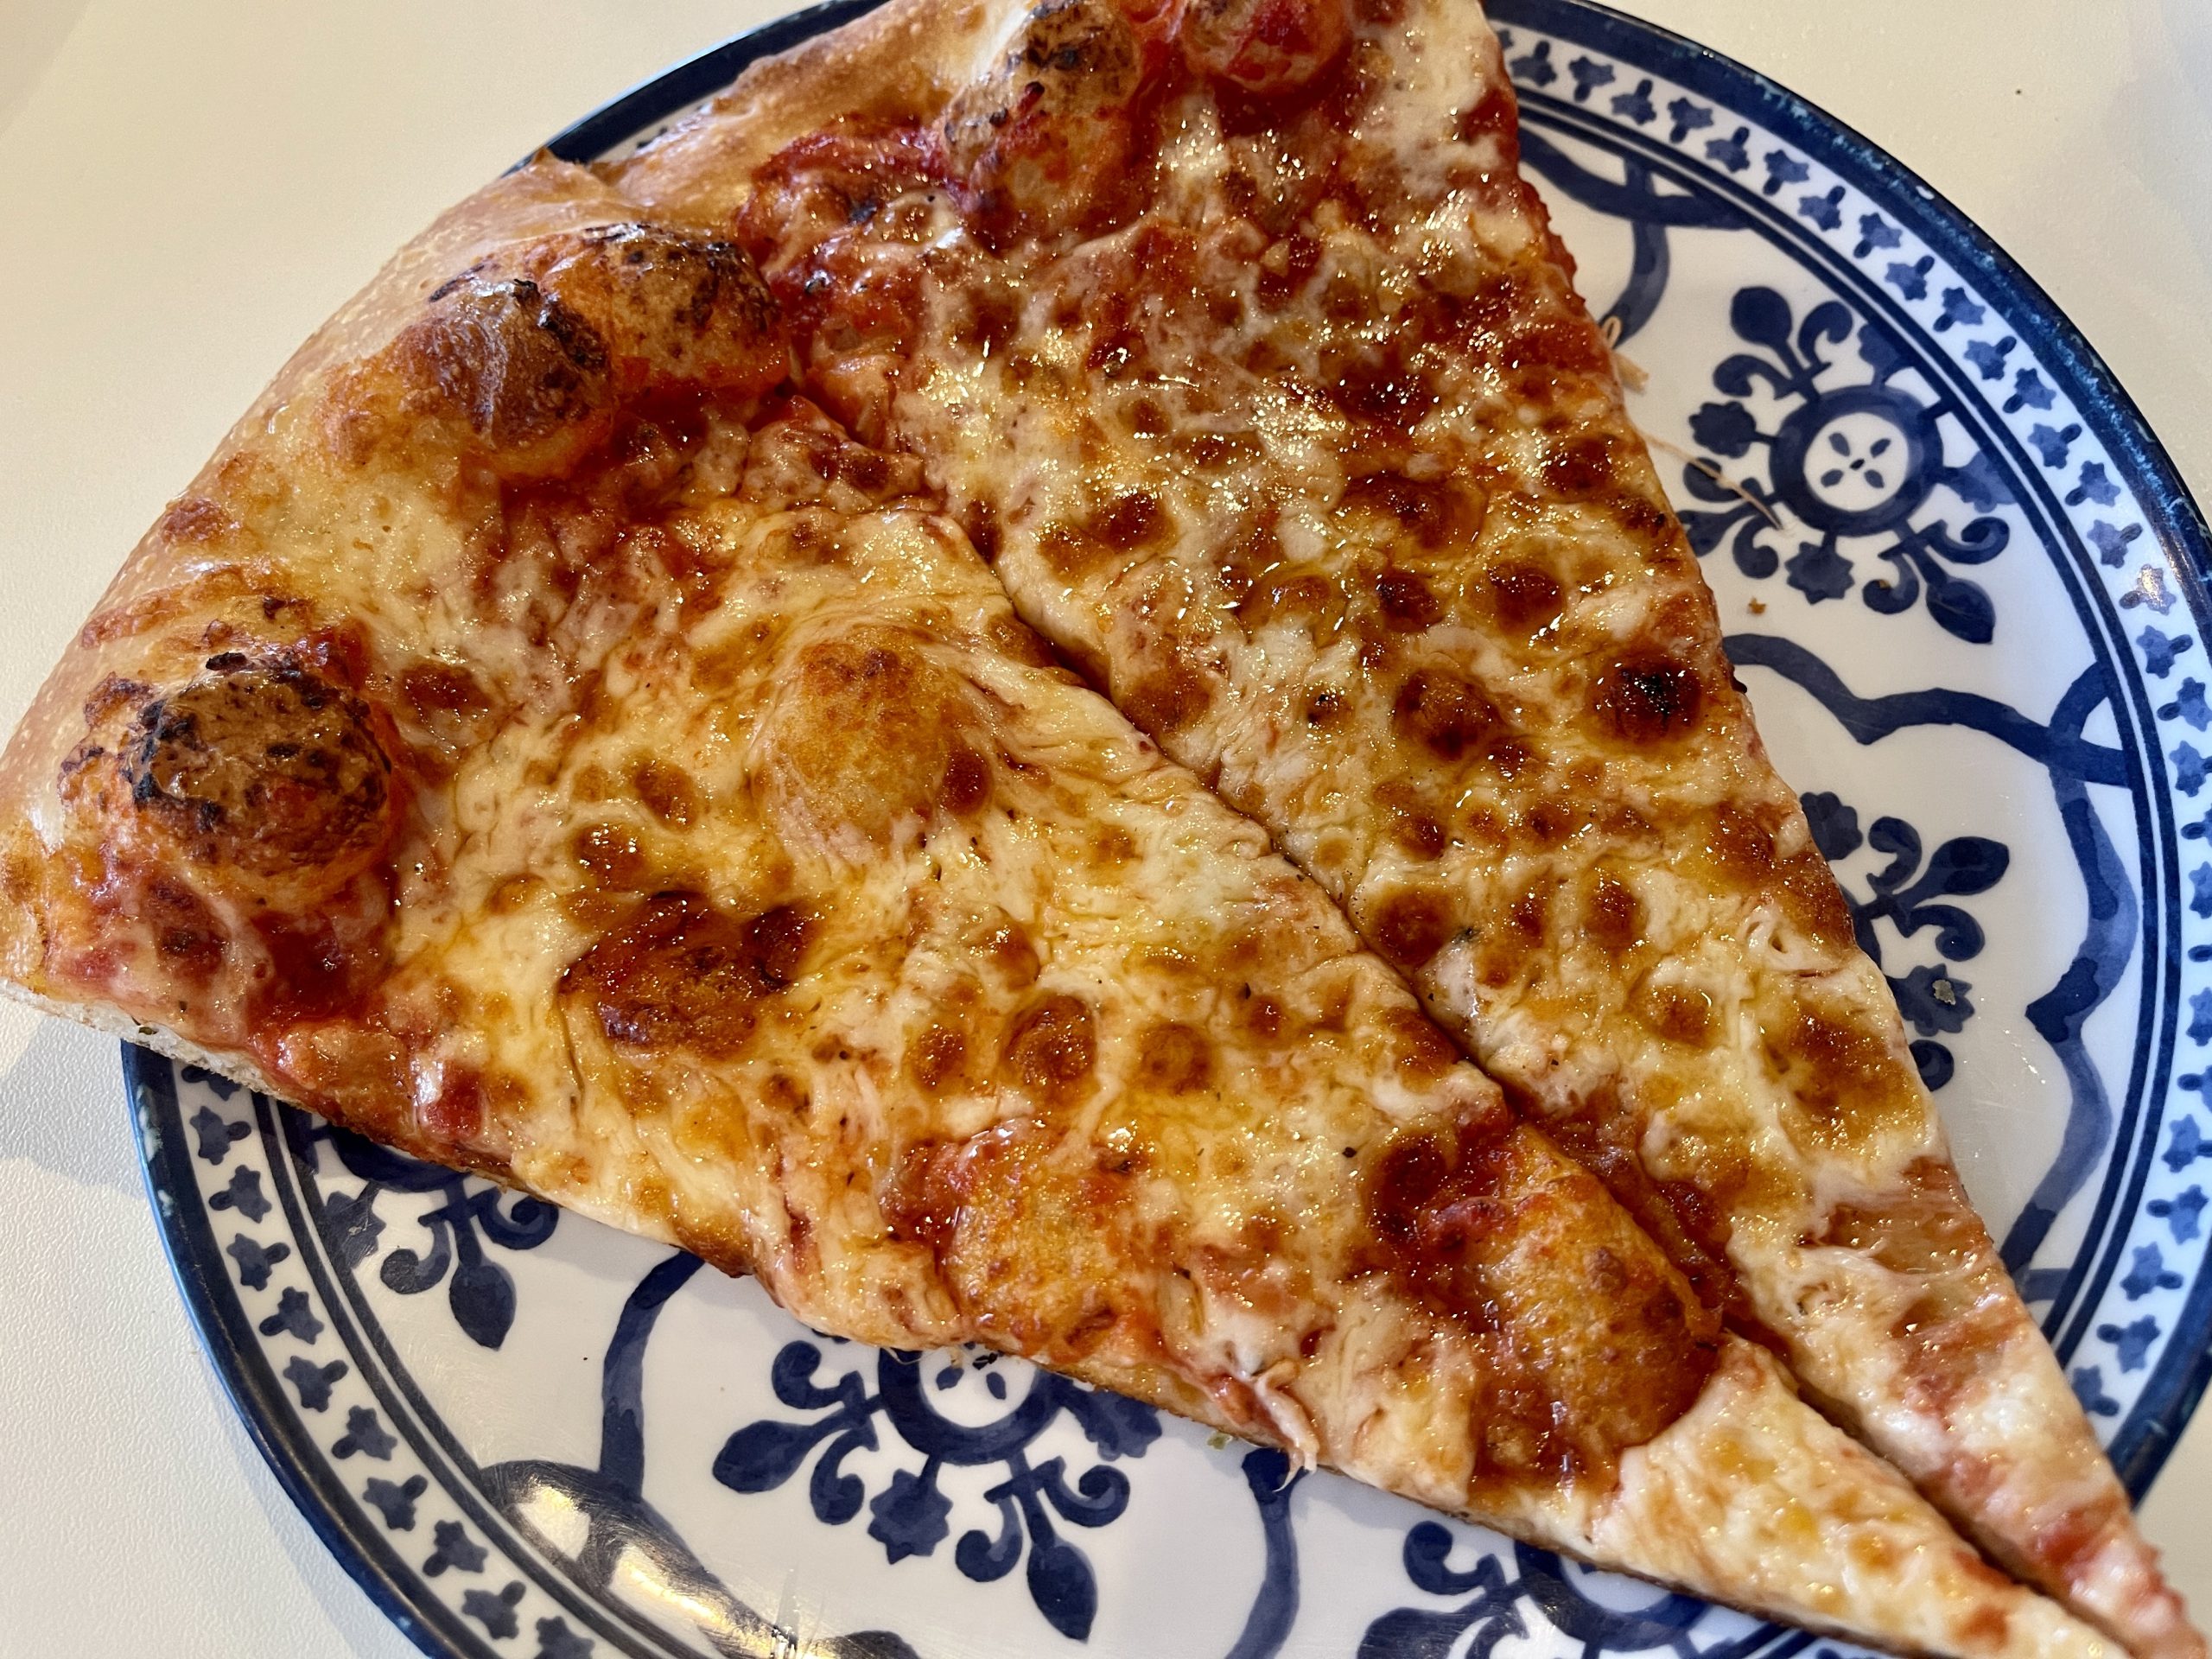 Local Pizza's NY-Style Pizza Slices